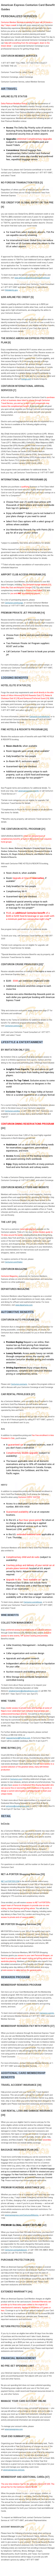 centurion_benefit_guide